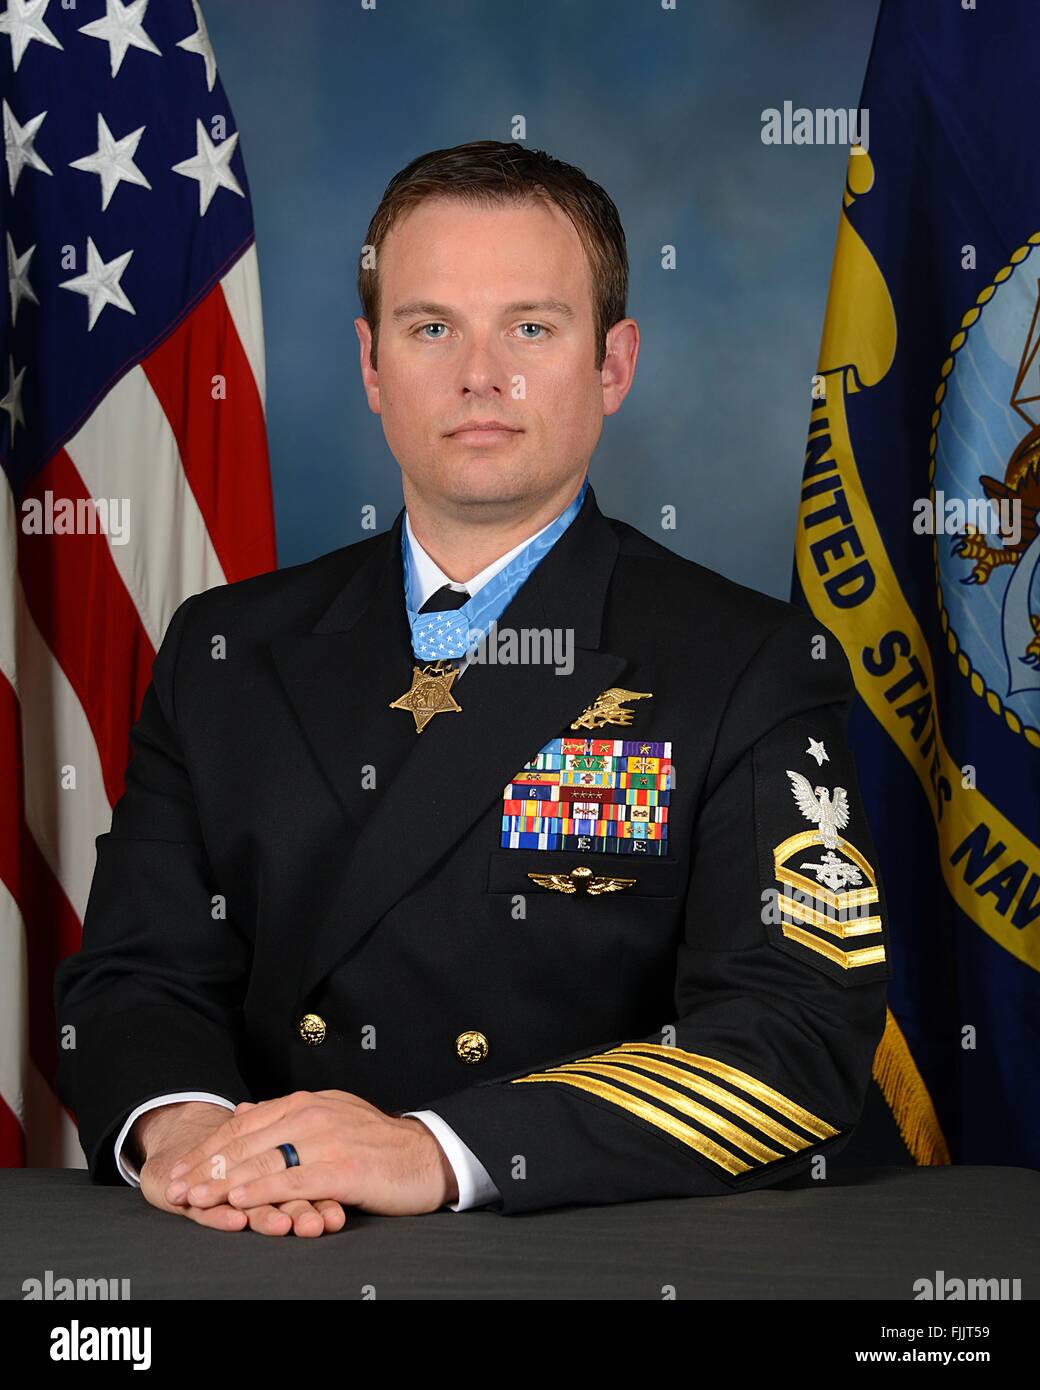 Navy Chief Petty Officer Dress Uniform